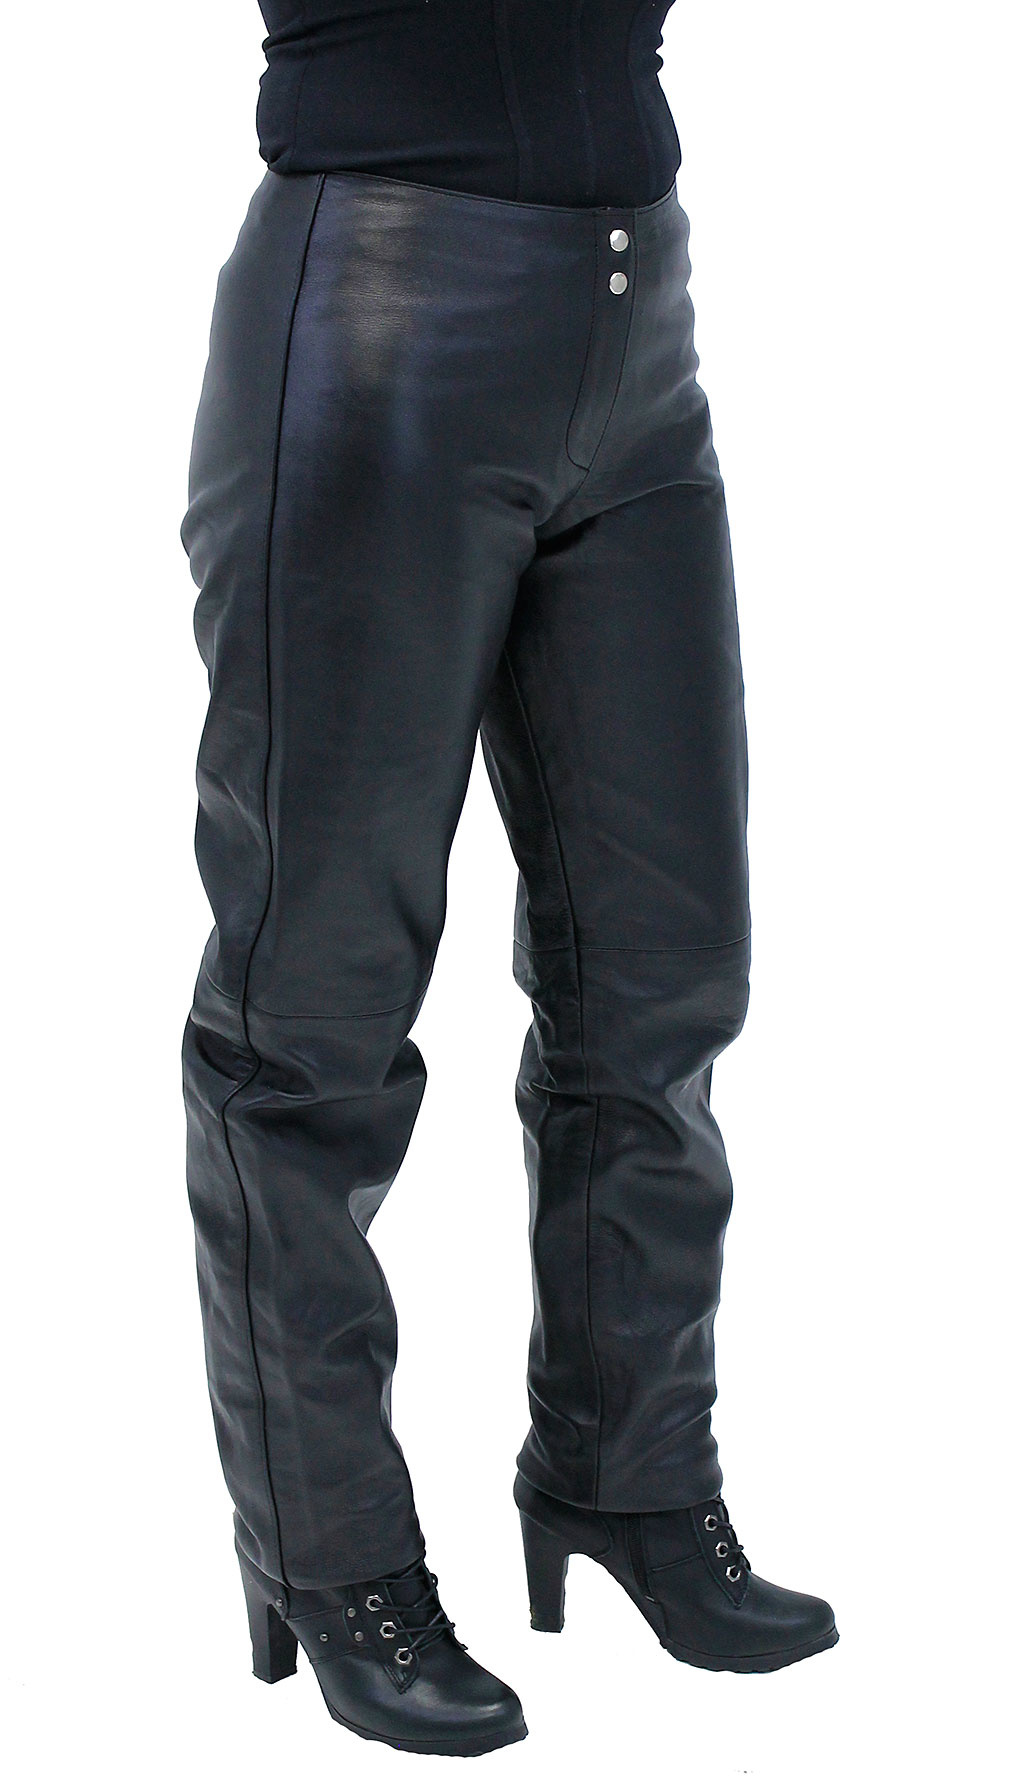 Lambskin Leather Pants for Women #LP591L - Jamin Leather®